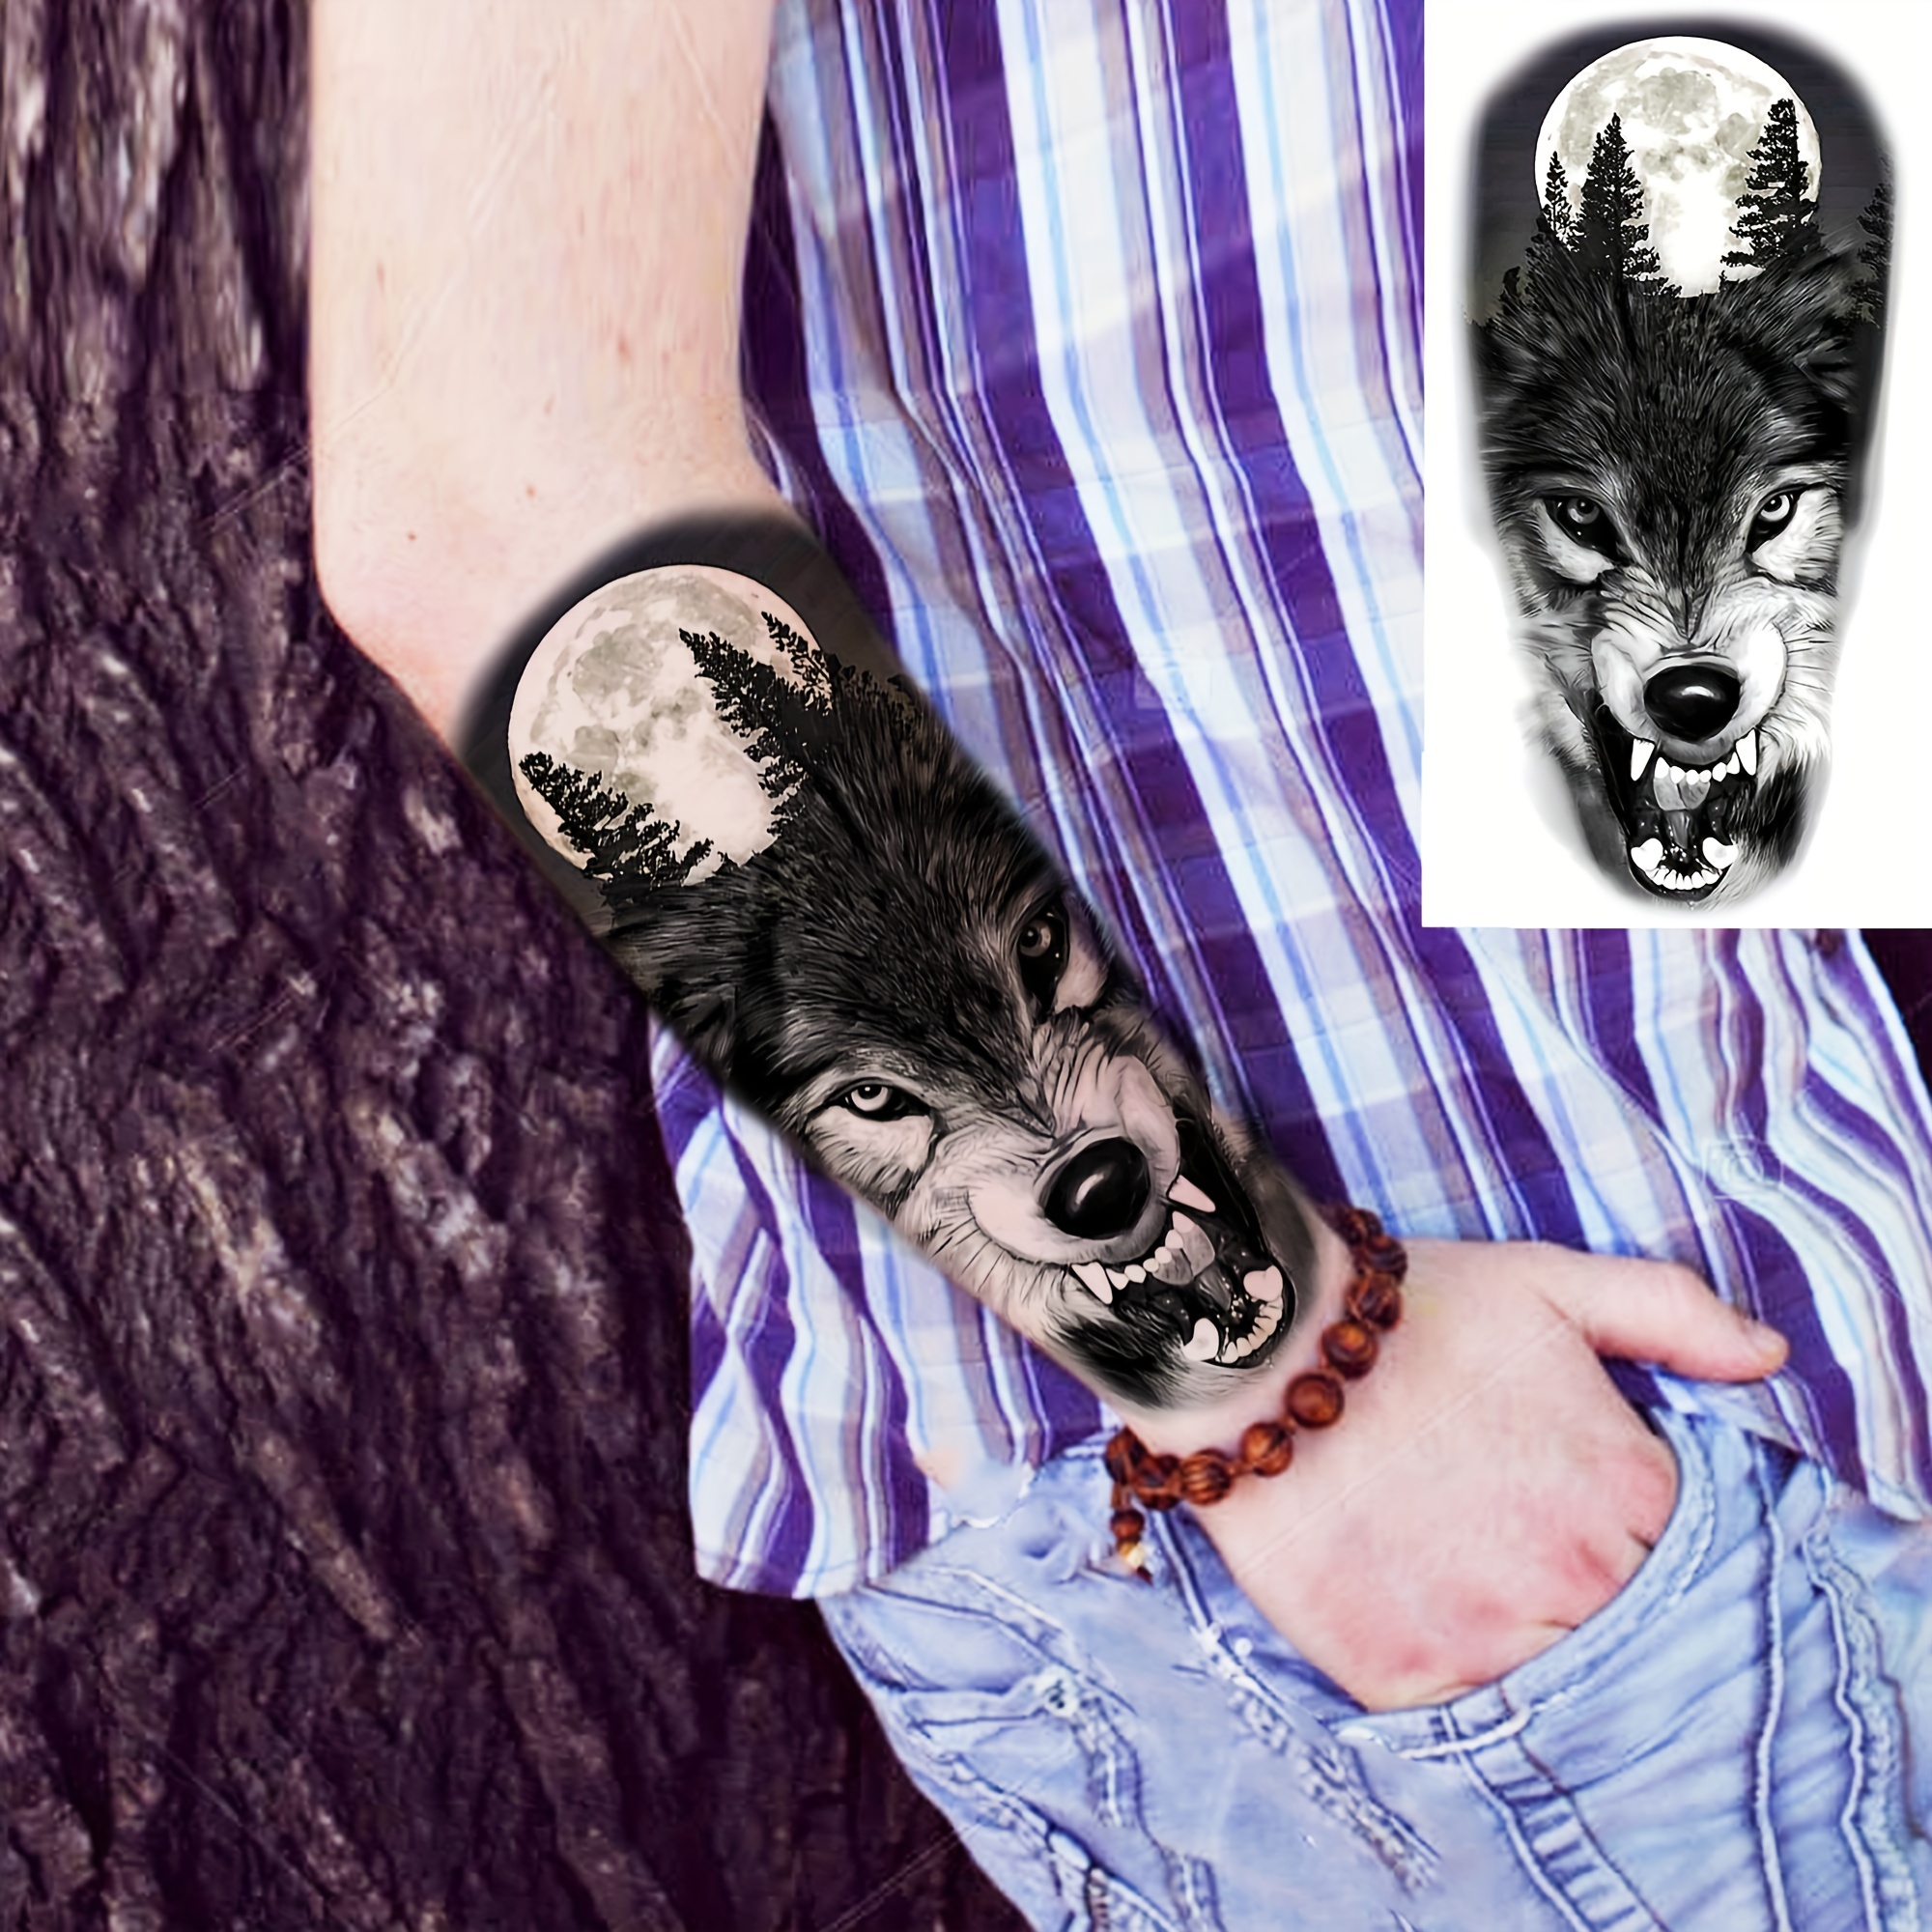 wolf tattoo sleeve